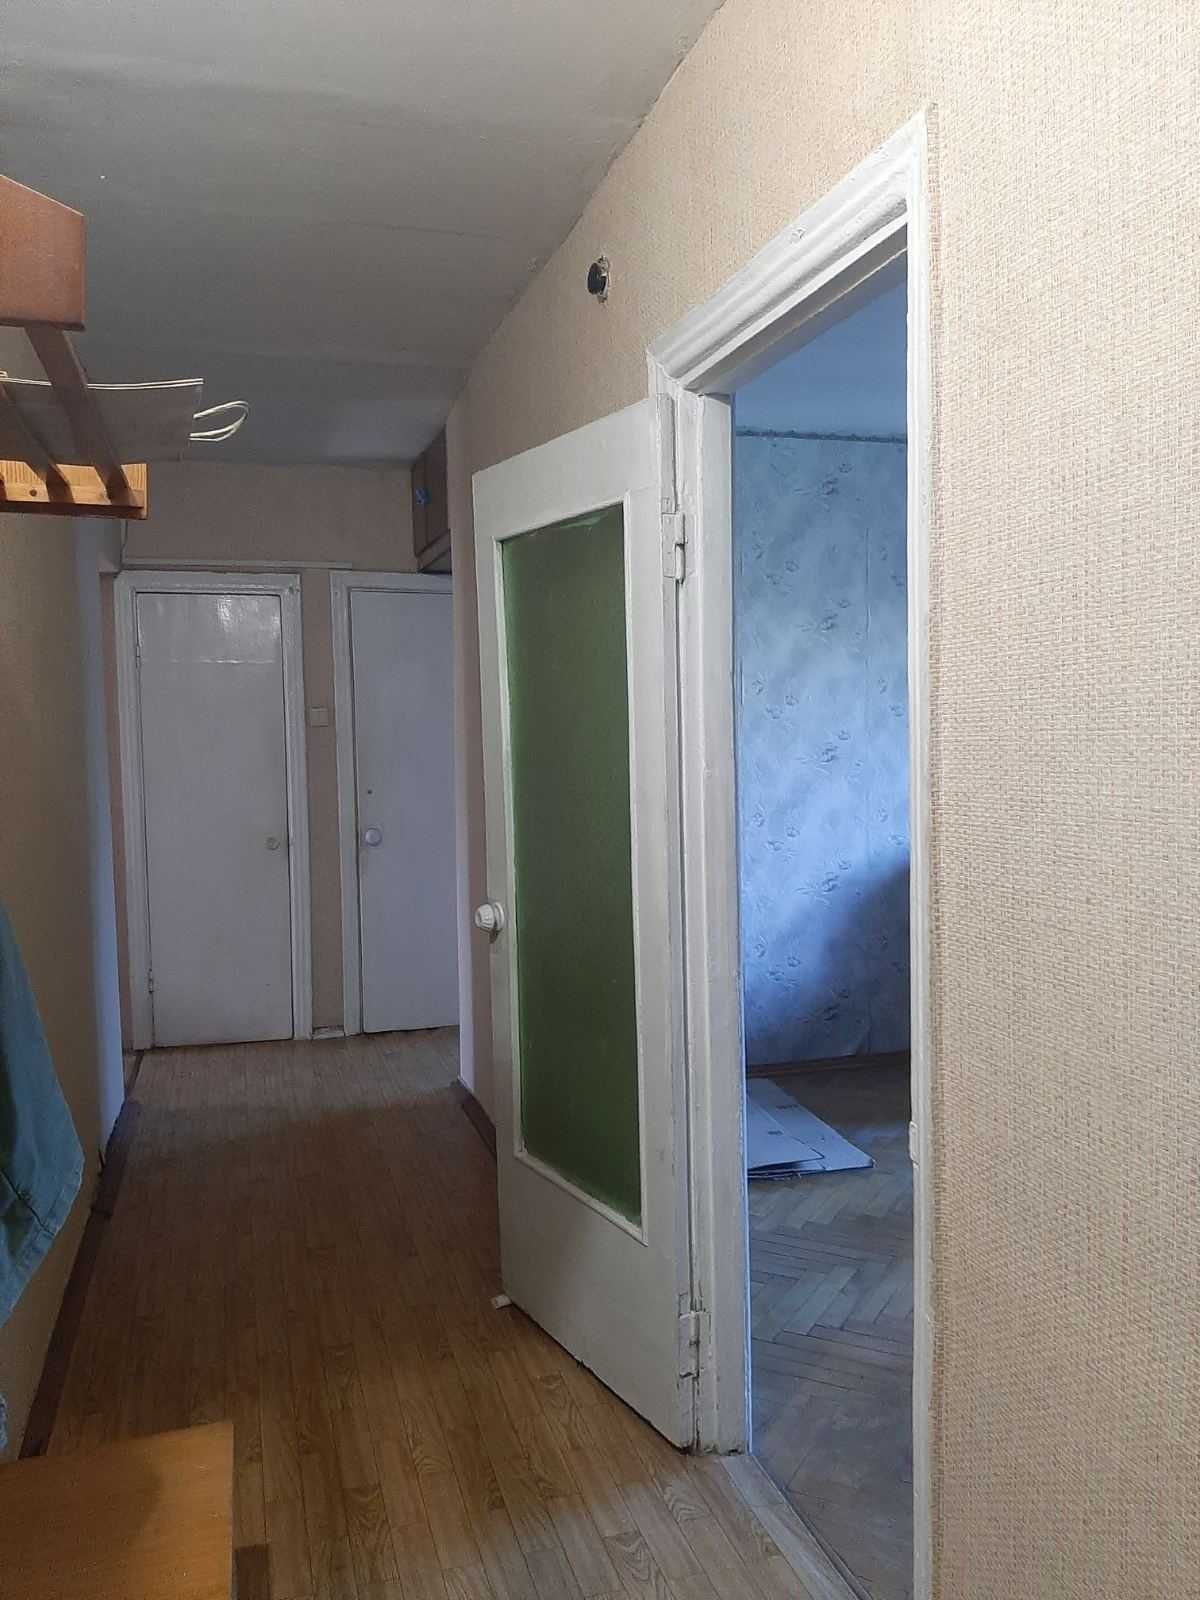 Боярка центр Сєдова 5 оренда 3х кімнатної квартири